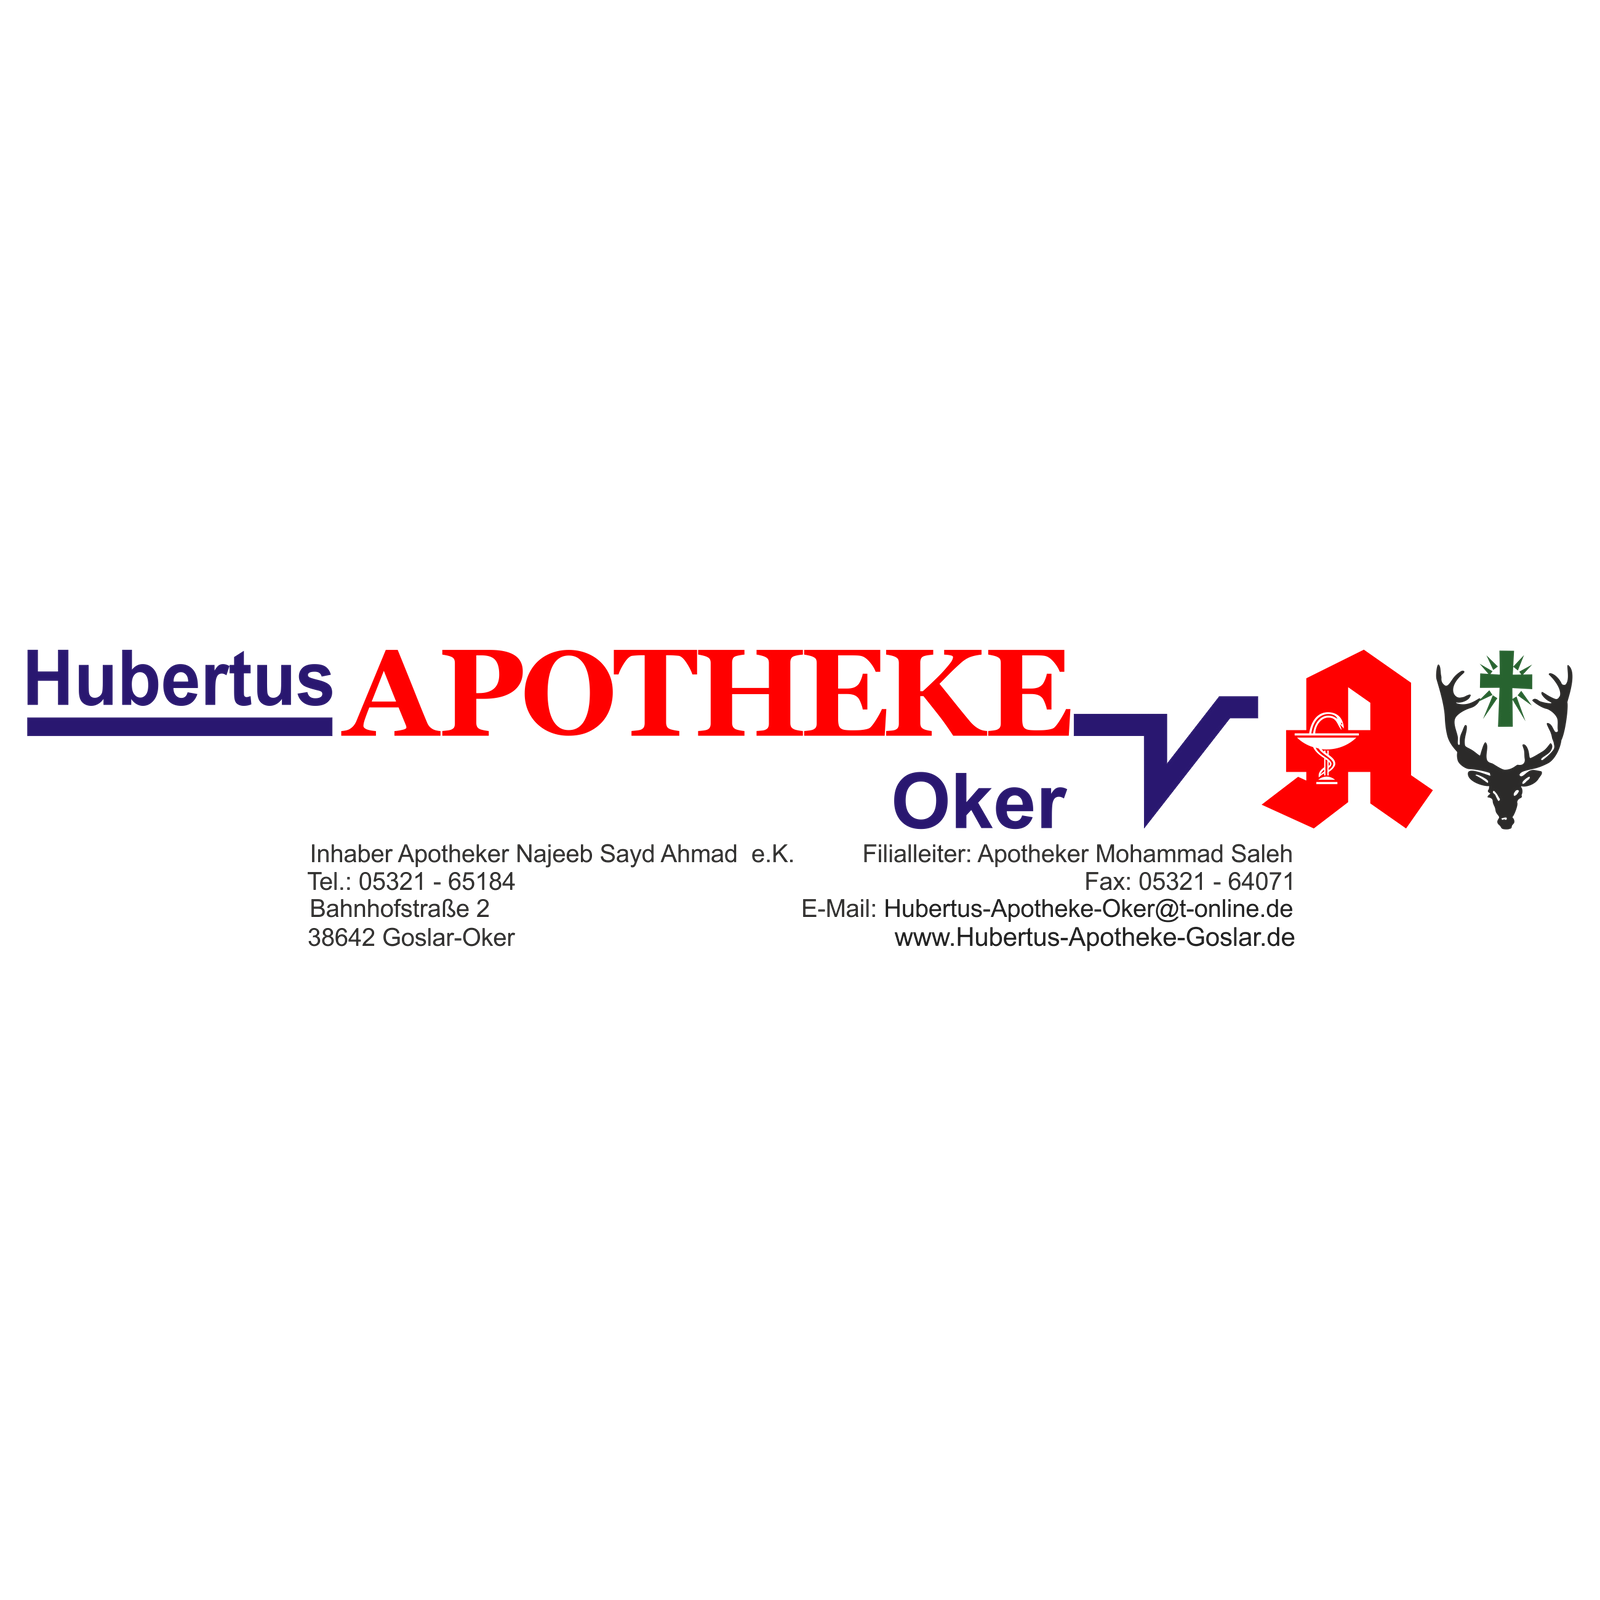 Hubertus Apotheke Oker in Goslar - Logo